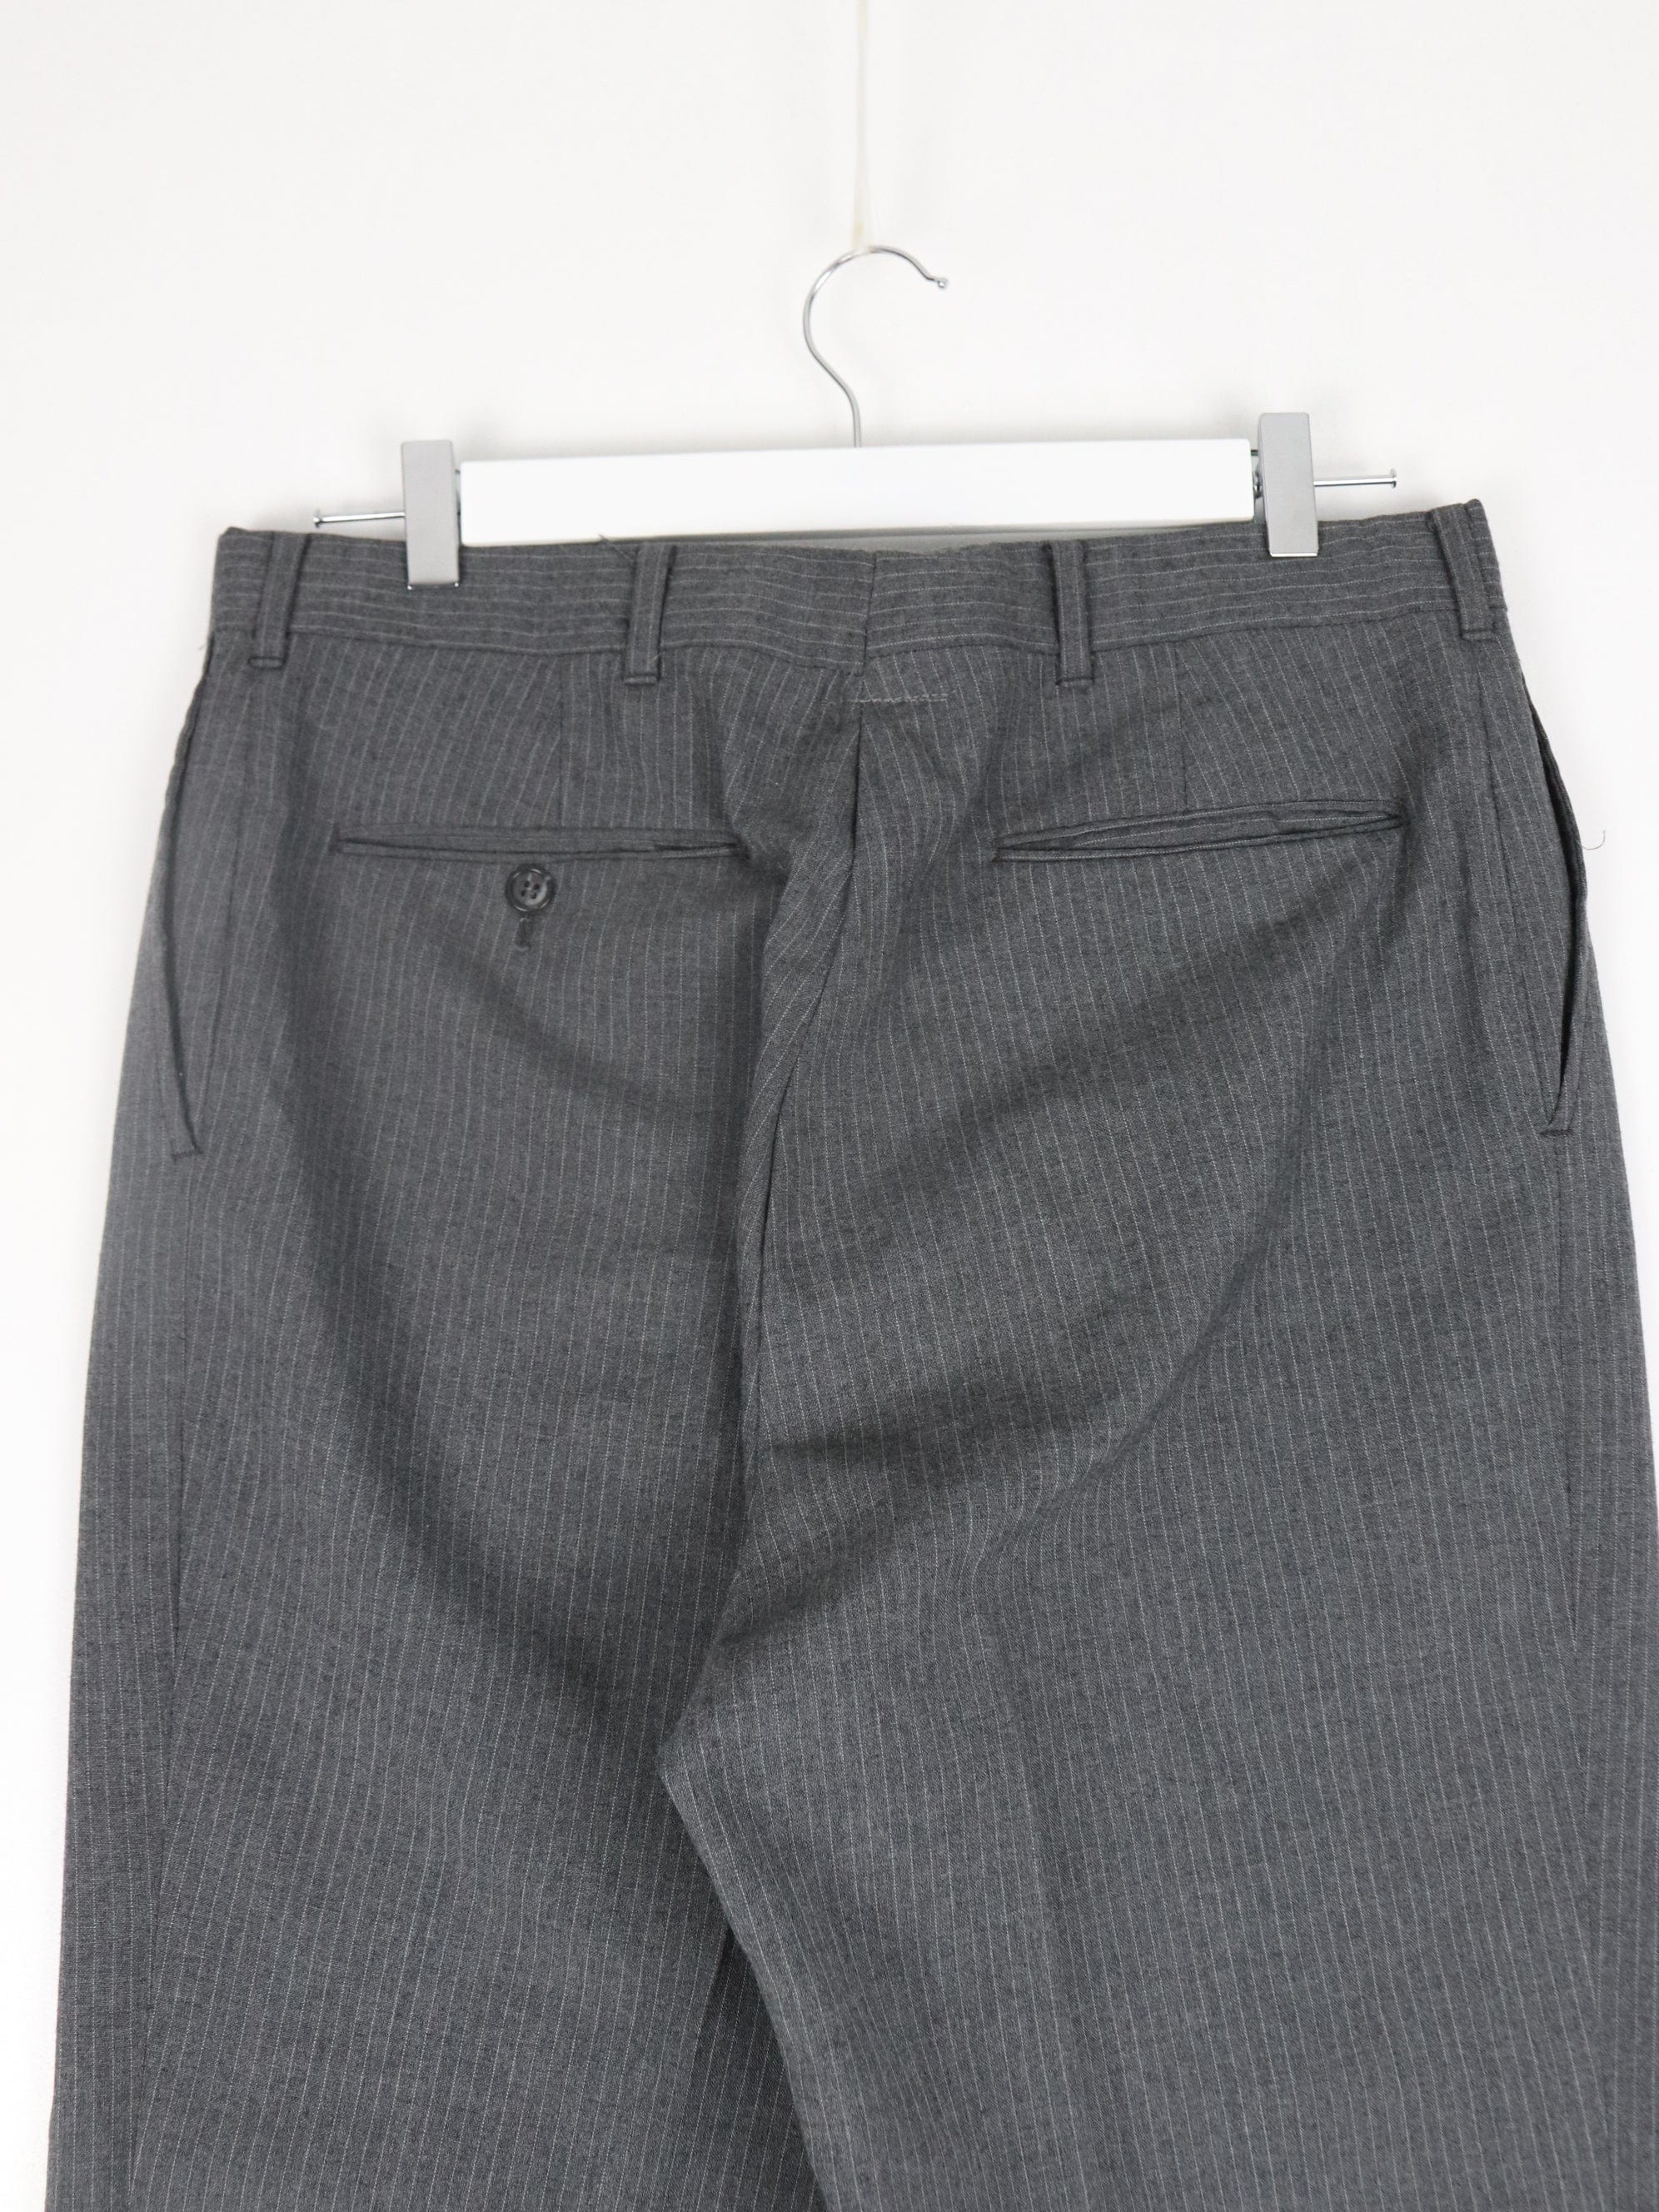 Vintage Dress Pants Mens 34 x 28 Grey Pinstripe Preppy 70s 80s